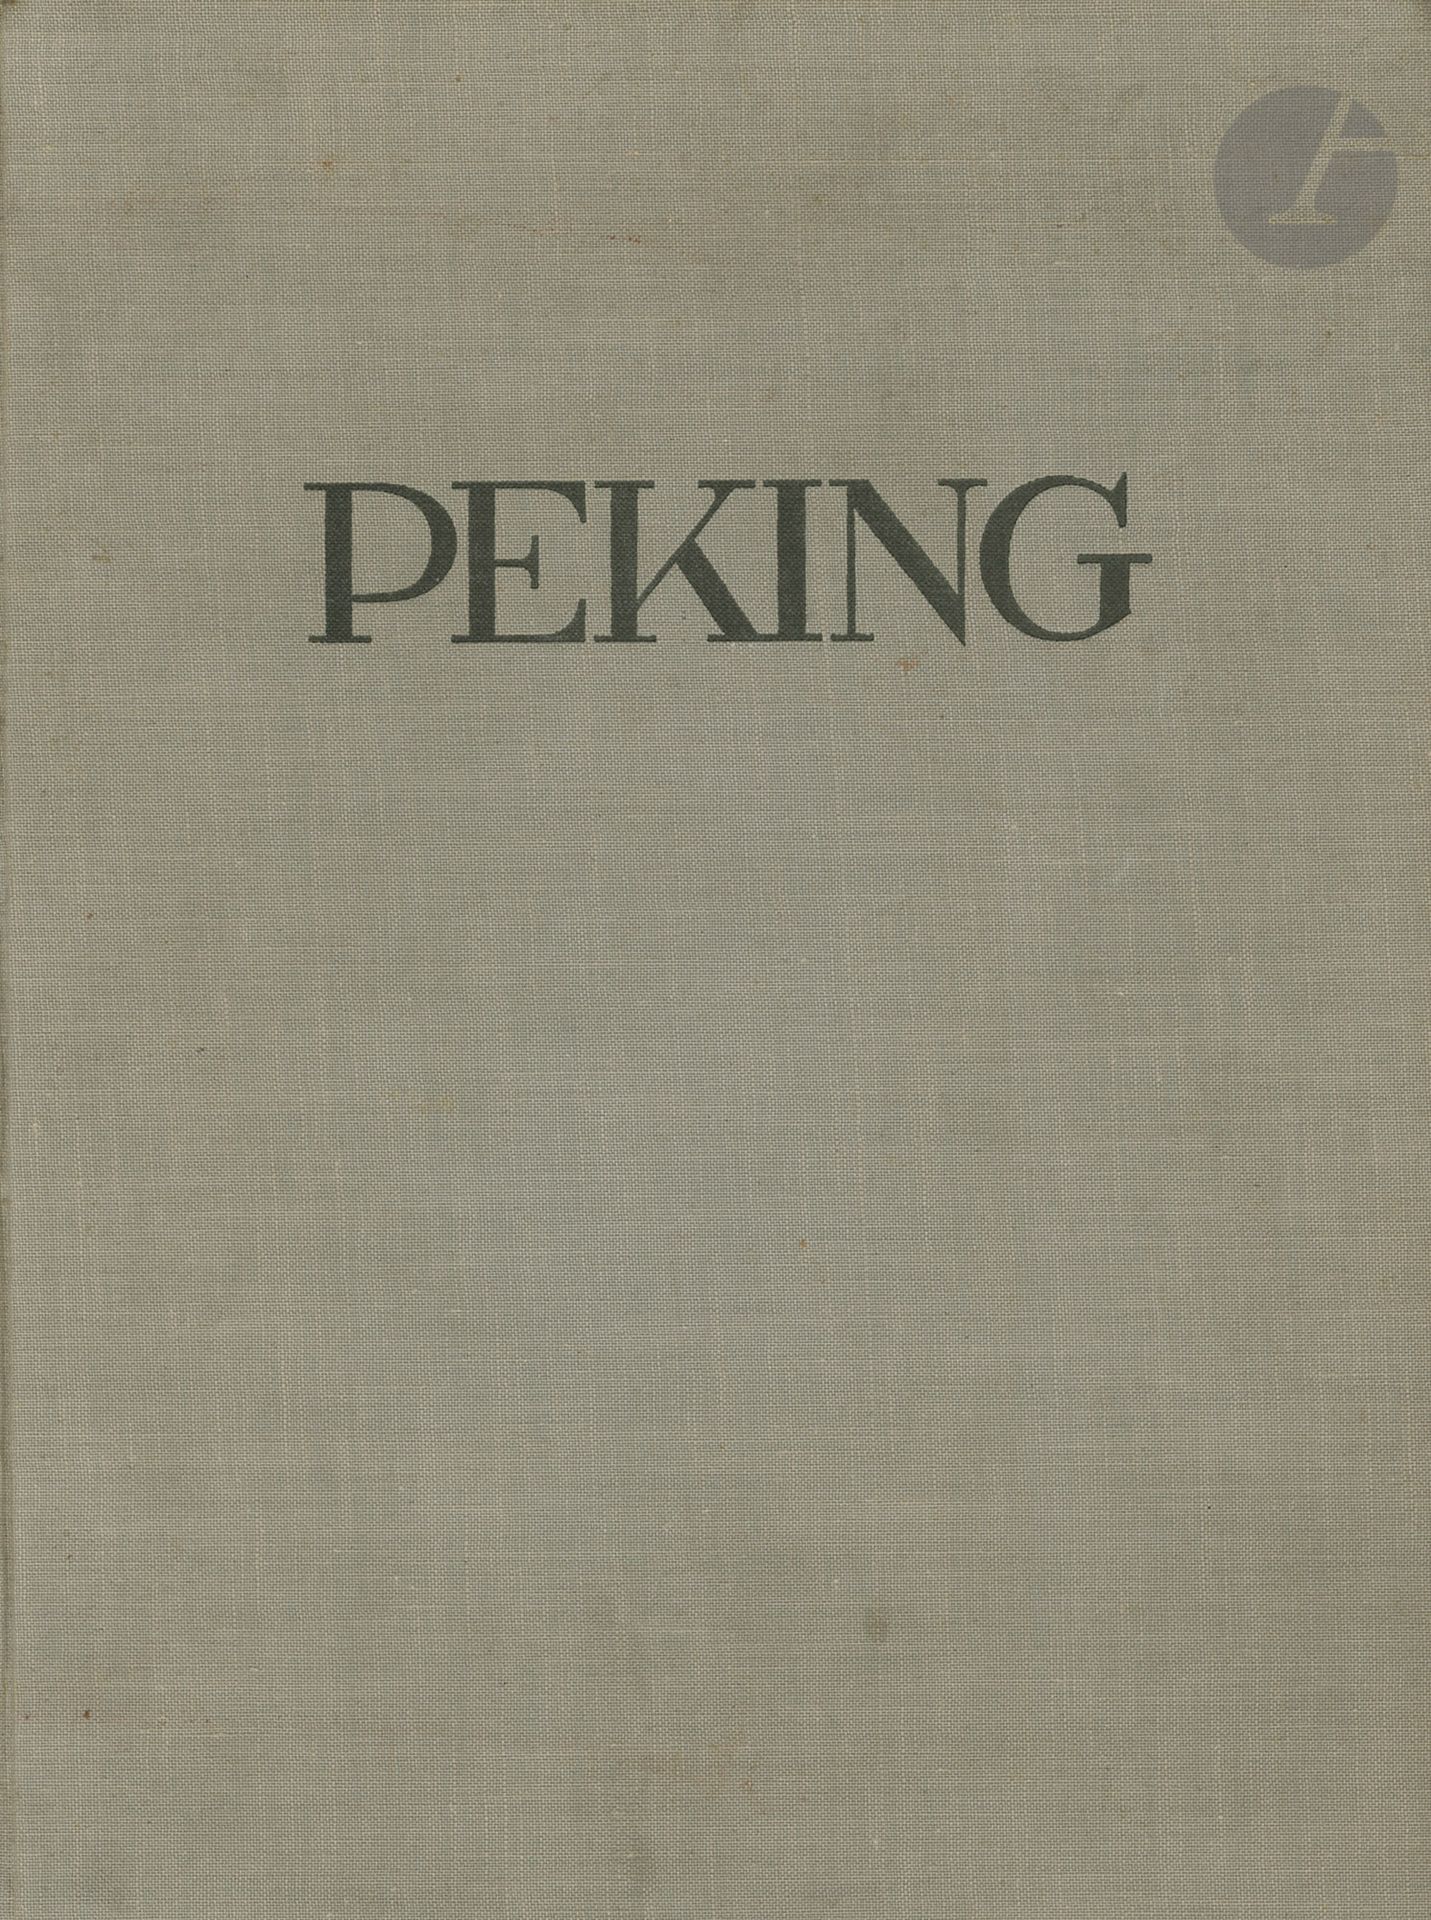 Null 佩克哈默，海因茨-冯（1895-1965
）北京。
Albertus Verlag, Berlin, 1928,
In-4 (29 x 23 cm)
&hellip;